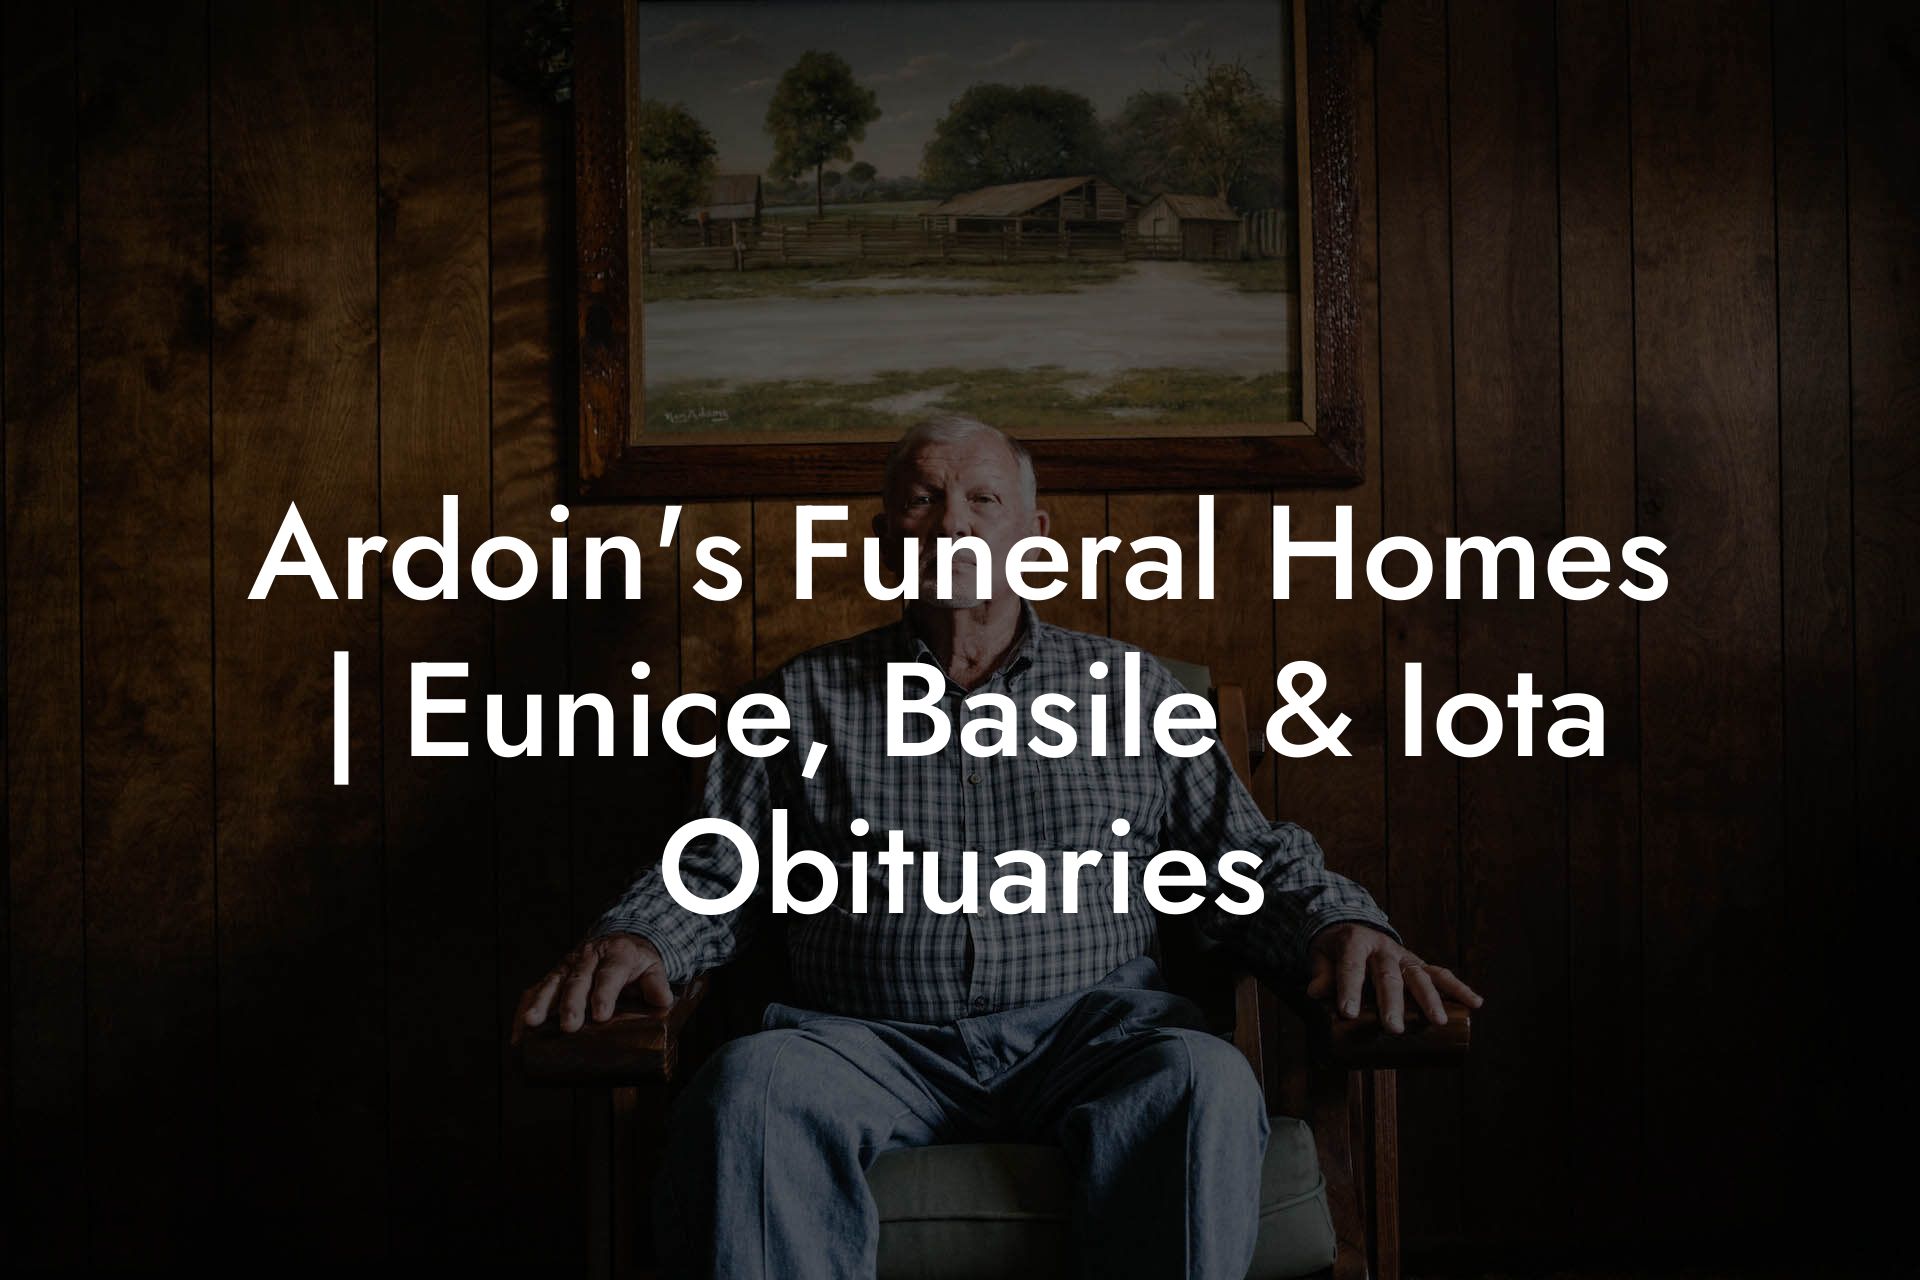 Ardoin's Funeral Homes | Eunice, Basile & Iota Obituaries